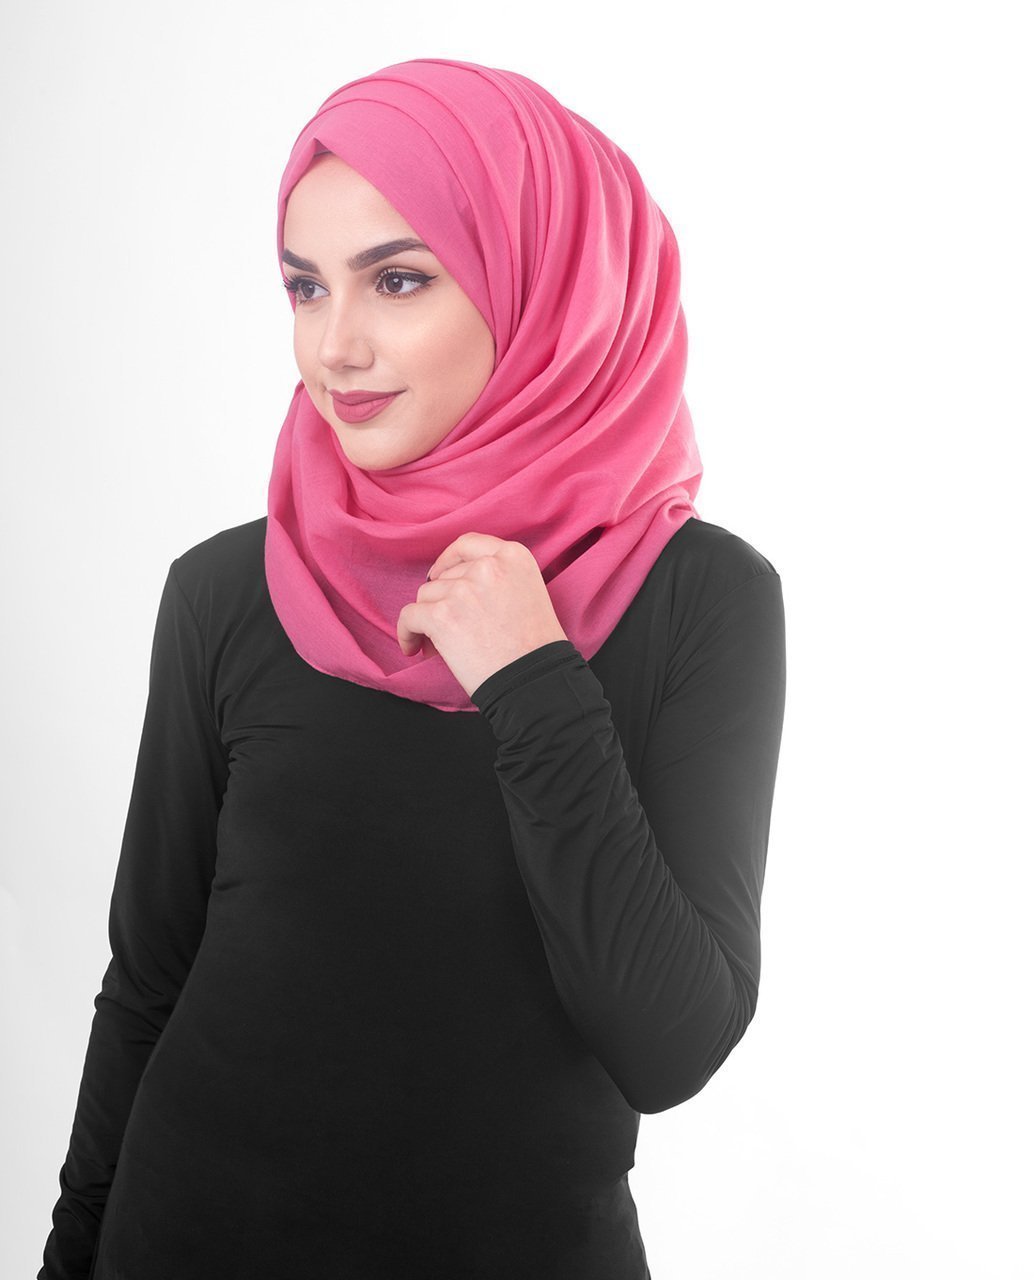 Honeysuckle Cotton Voile Hijab Scarf - MeHijabi.com